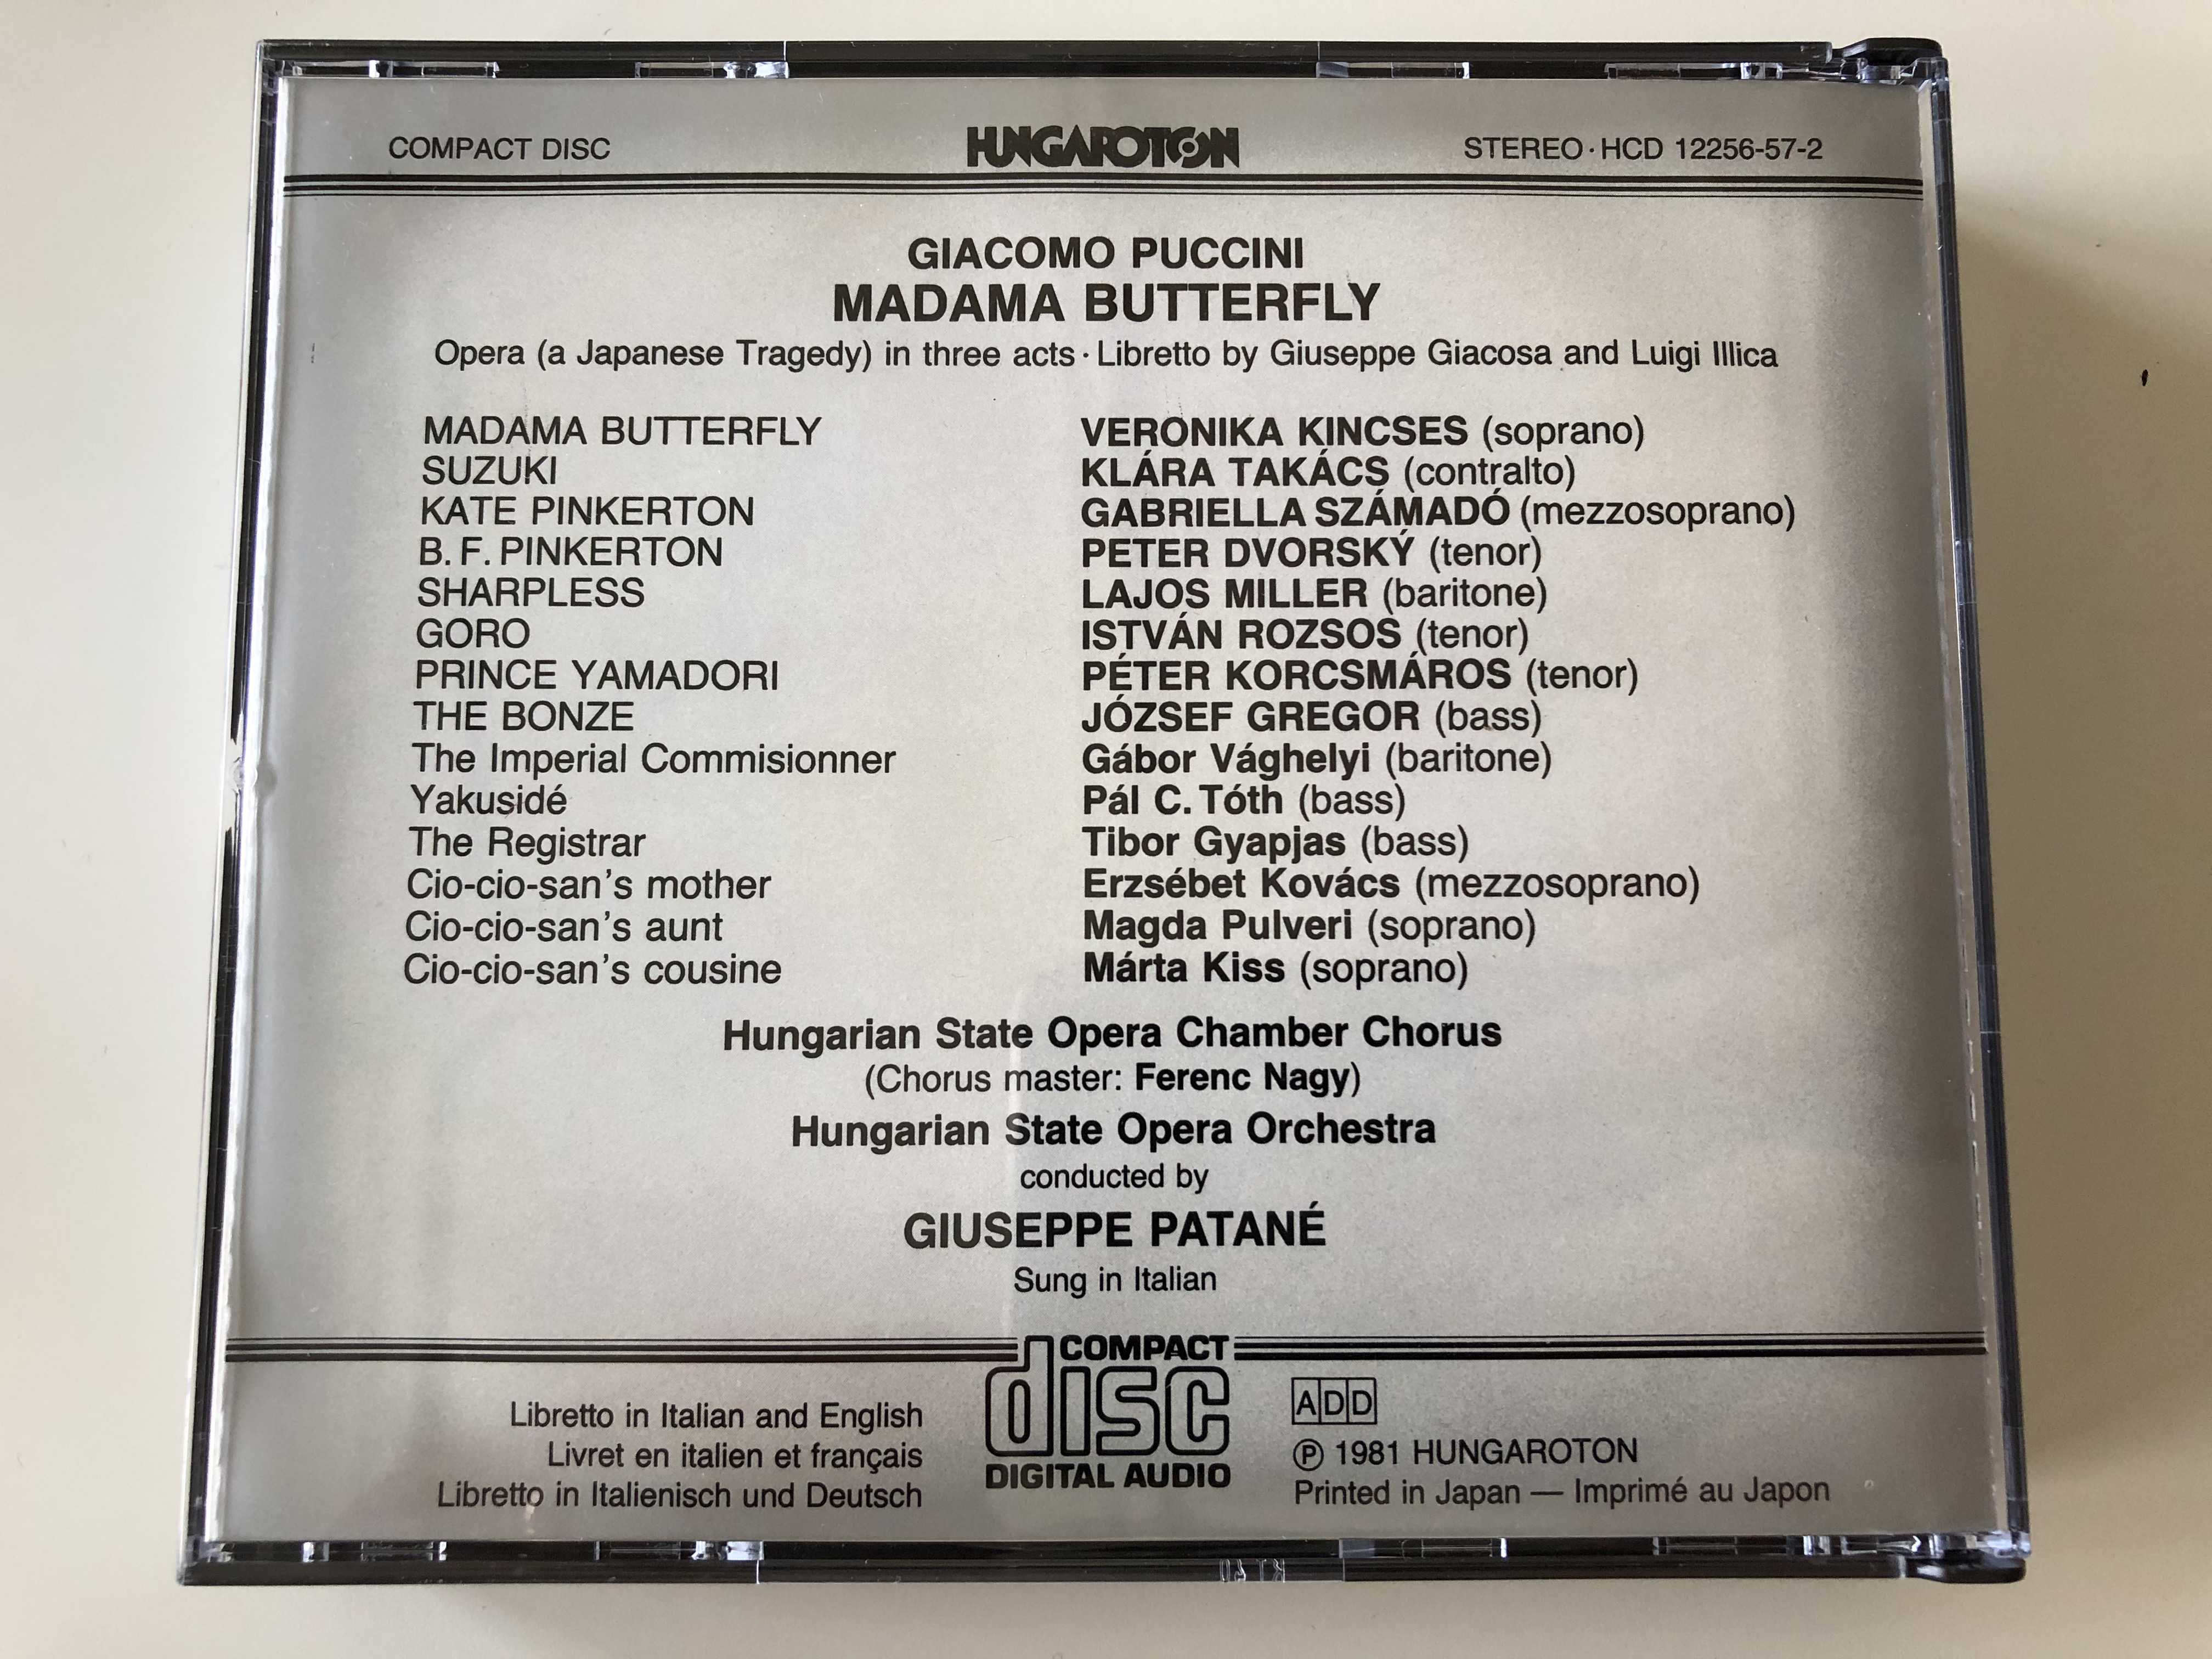 puccini-madama-butterfly-giuseppe-patan-veronika-kincses-peter-dvorsk-lajos-miller-kl-ra-tak-cs-hungaroton-2x-audio-cd-1981-stereo-hcd-12256-57-2-4-.jpg